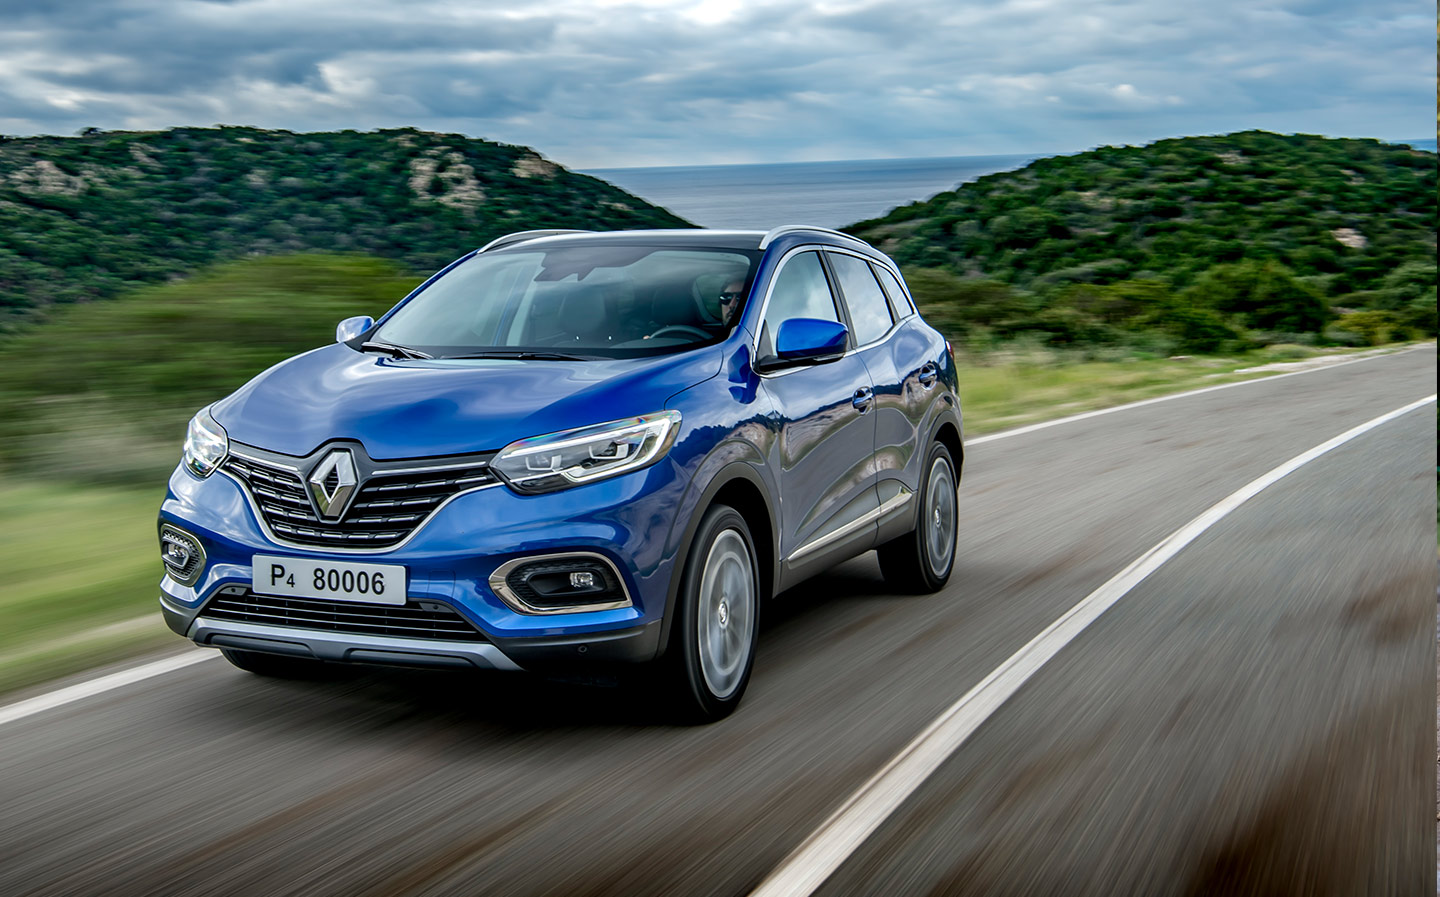 2019 Renault Kadjar review